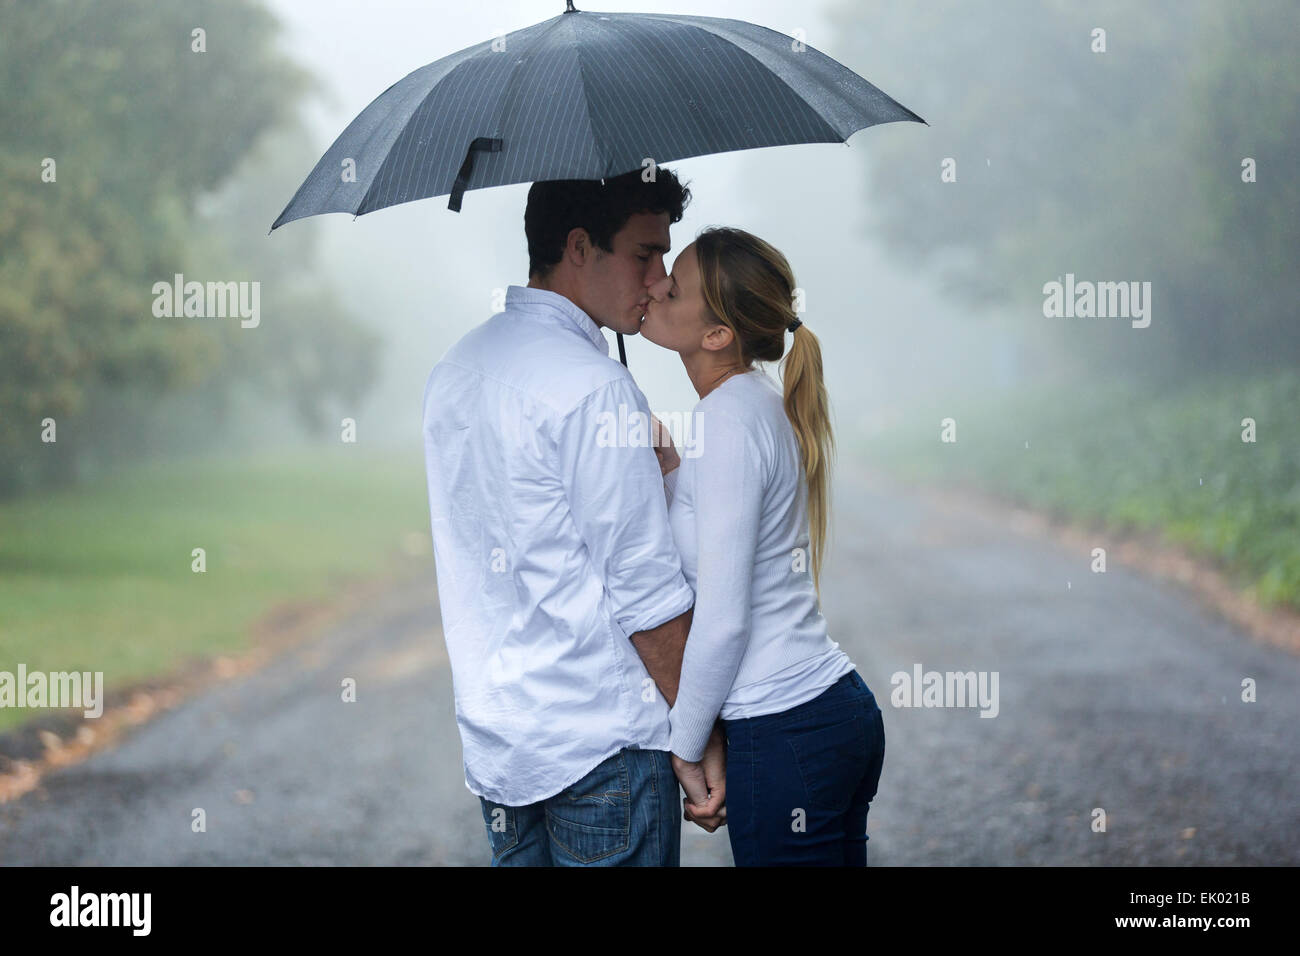 loving young couple in love under umbrella in the rain Stock Photo